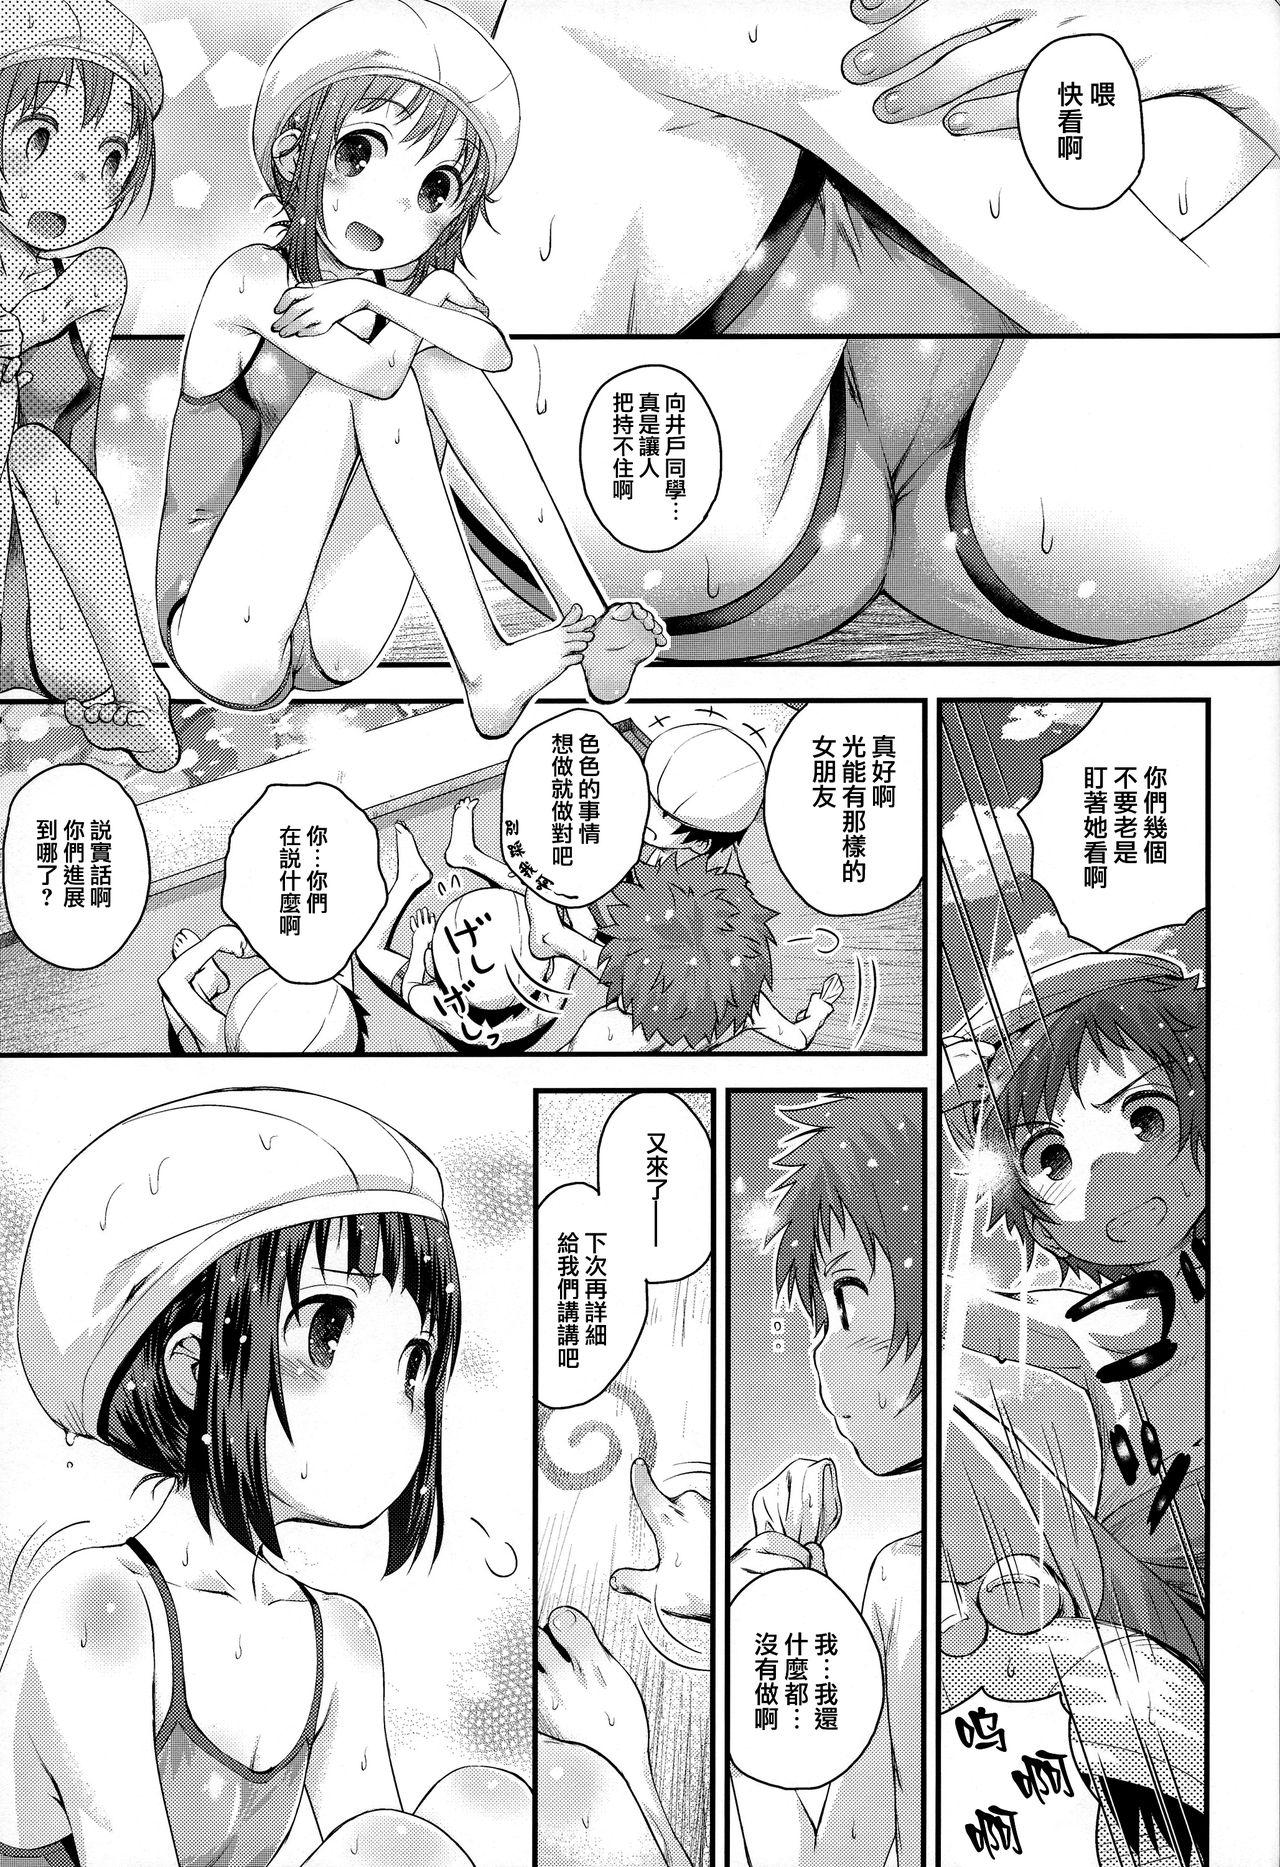 Web Soredemo Miuna - Nagi no asukara Girl Fuck - Page 3